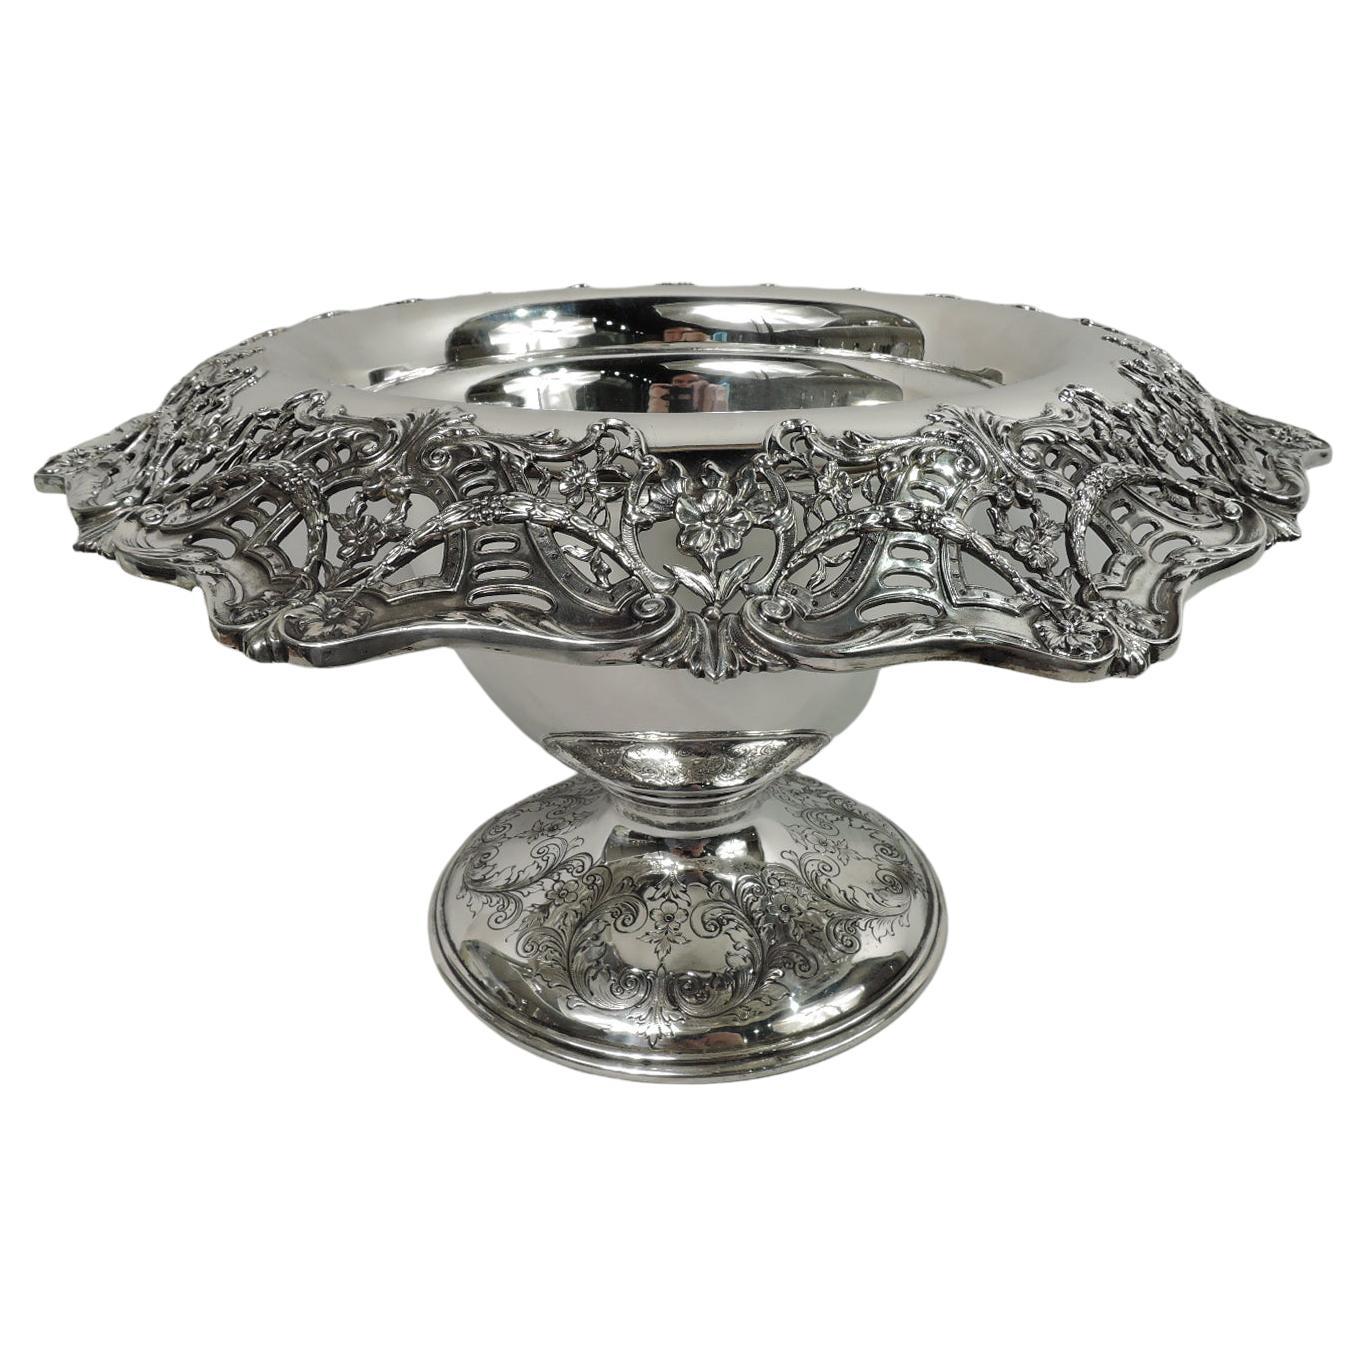 Antique American Edwardian Regency Sterling Silver Centerpiece Bowl